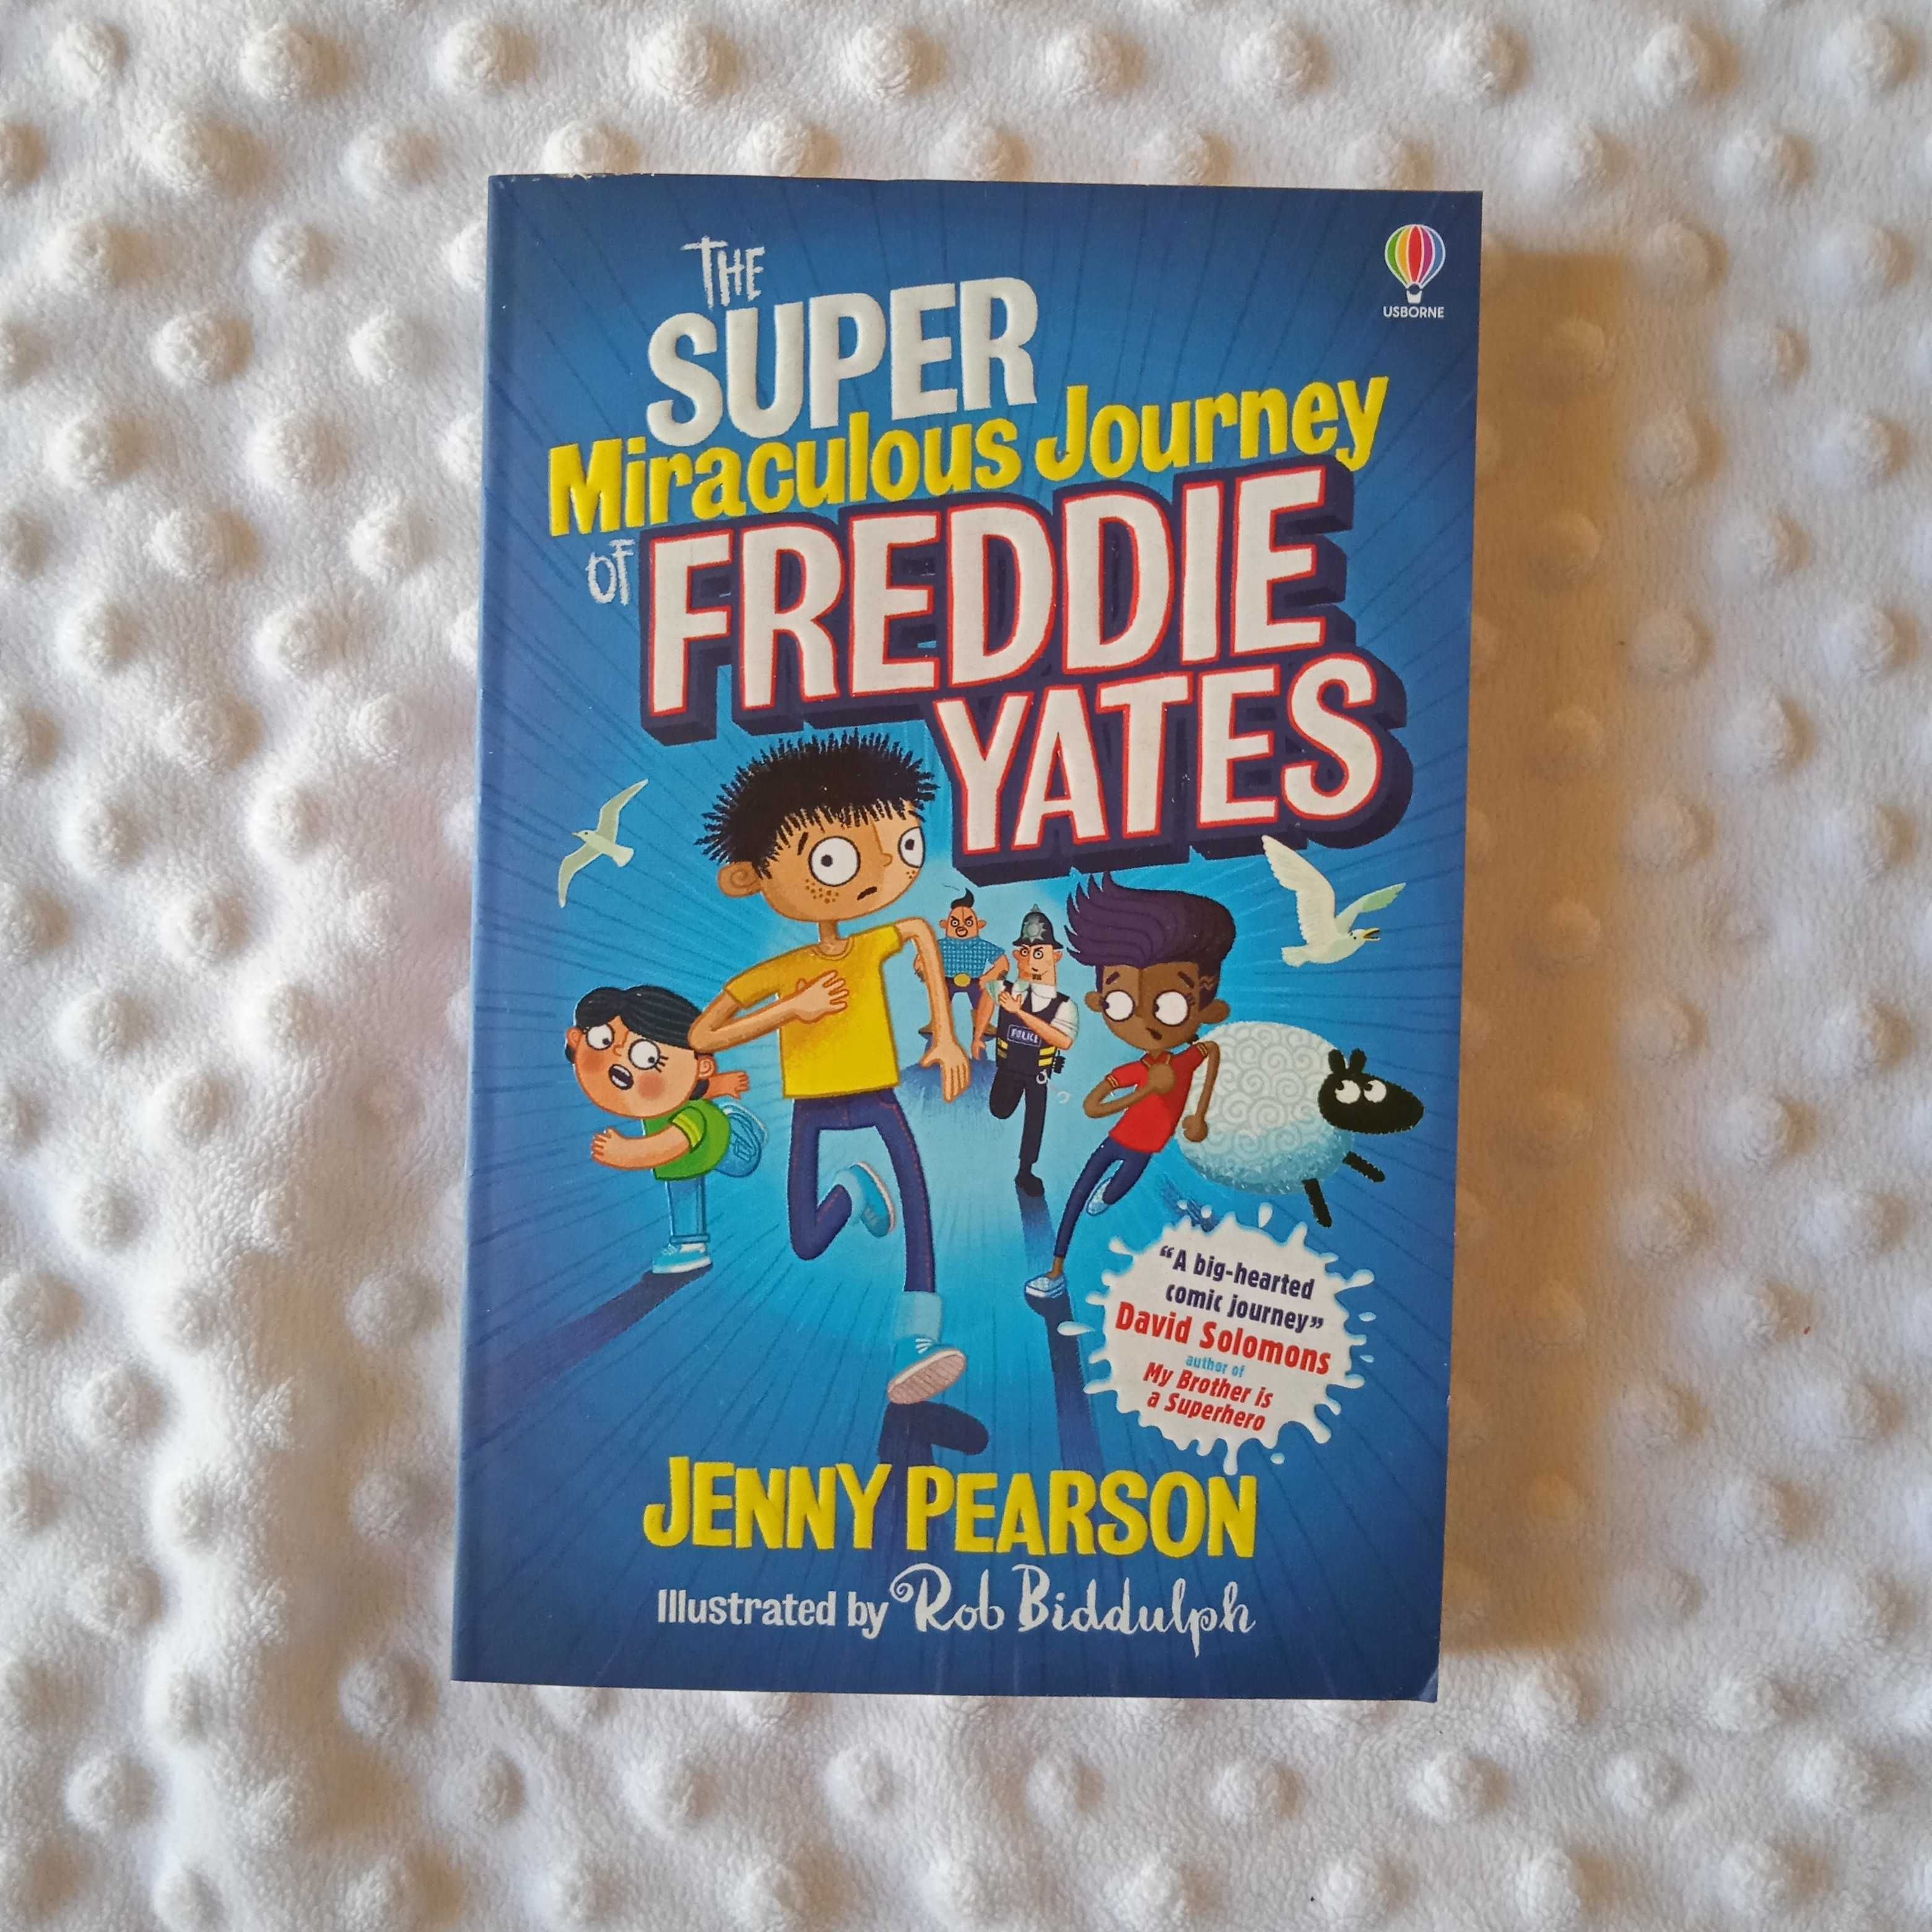 The Super Miraculous Journey of Freddie Yates Usborne